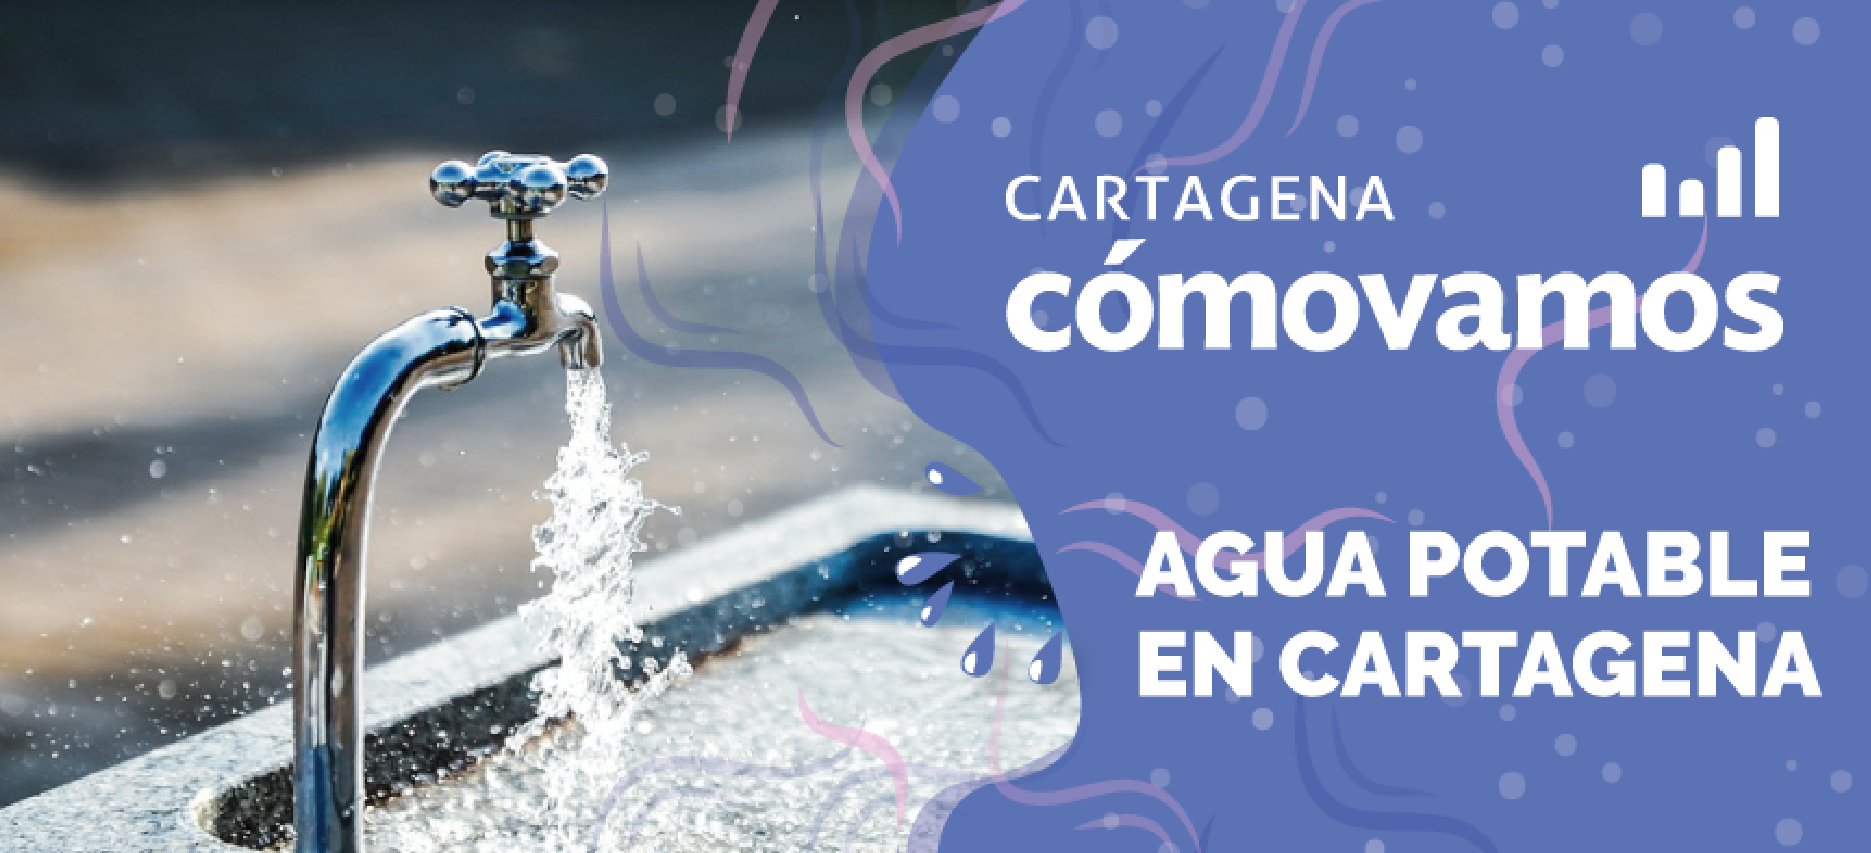 Agua potable en Cartagena | 2017